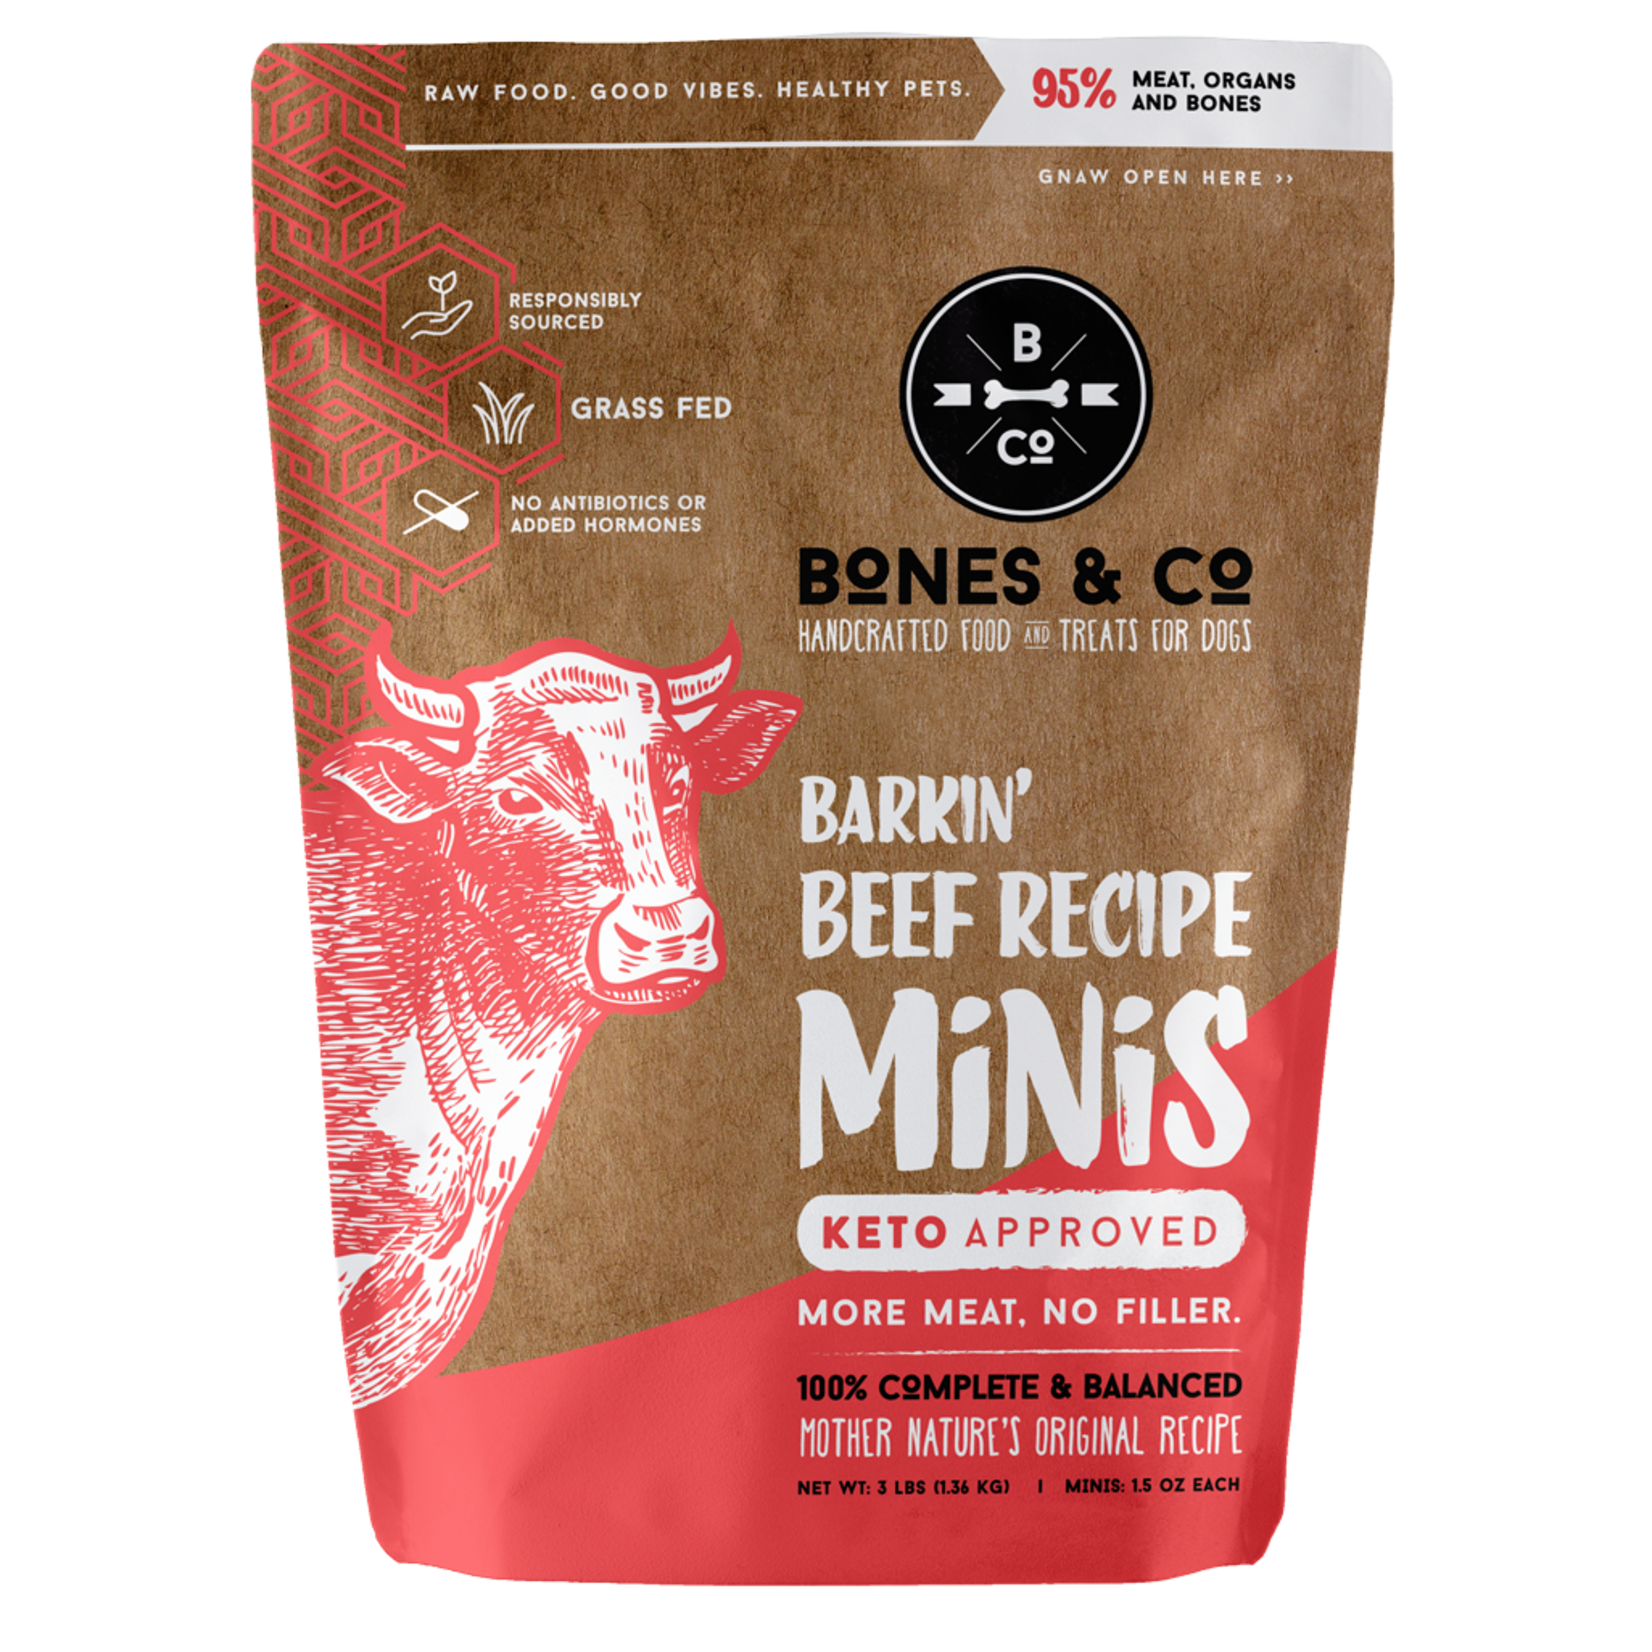 The Bones & Co. The Bones & Co. Dog Frozen Raw Barkin' Beef Recipe Minis